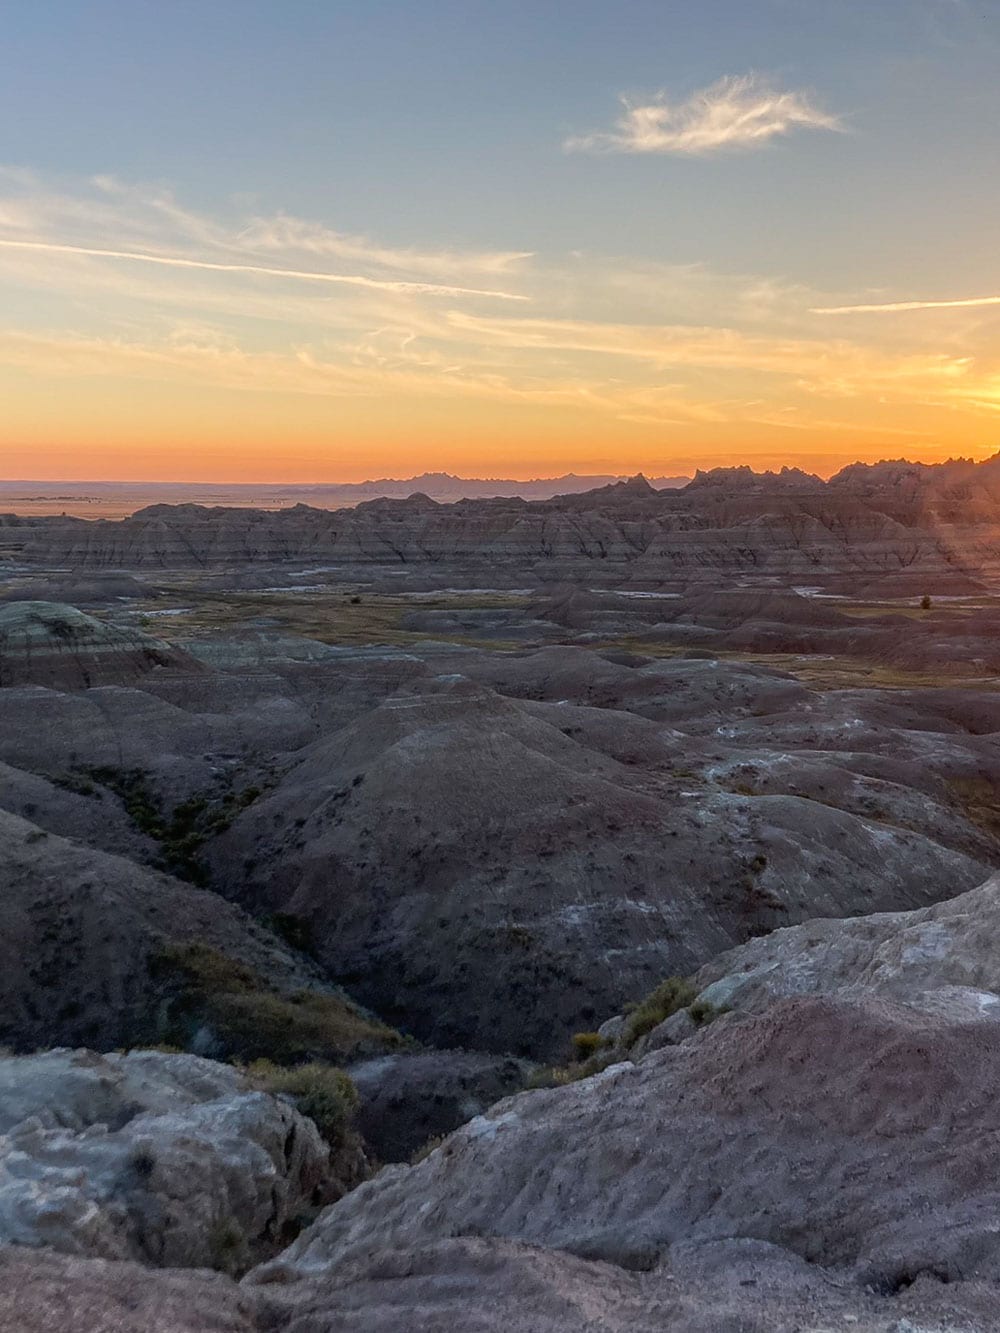 Conata Basin Overlook sunset view in Badlands National Park, South Dakota